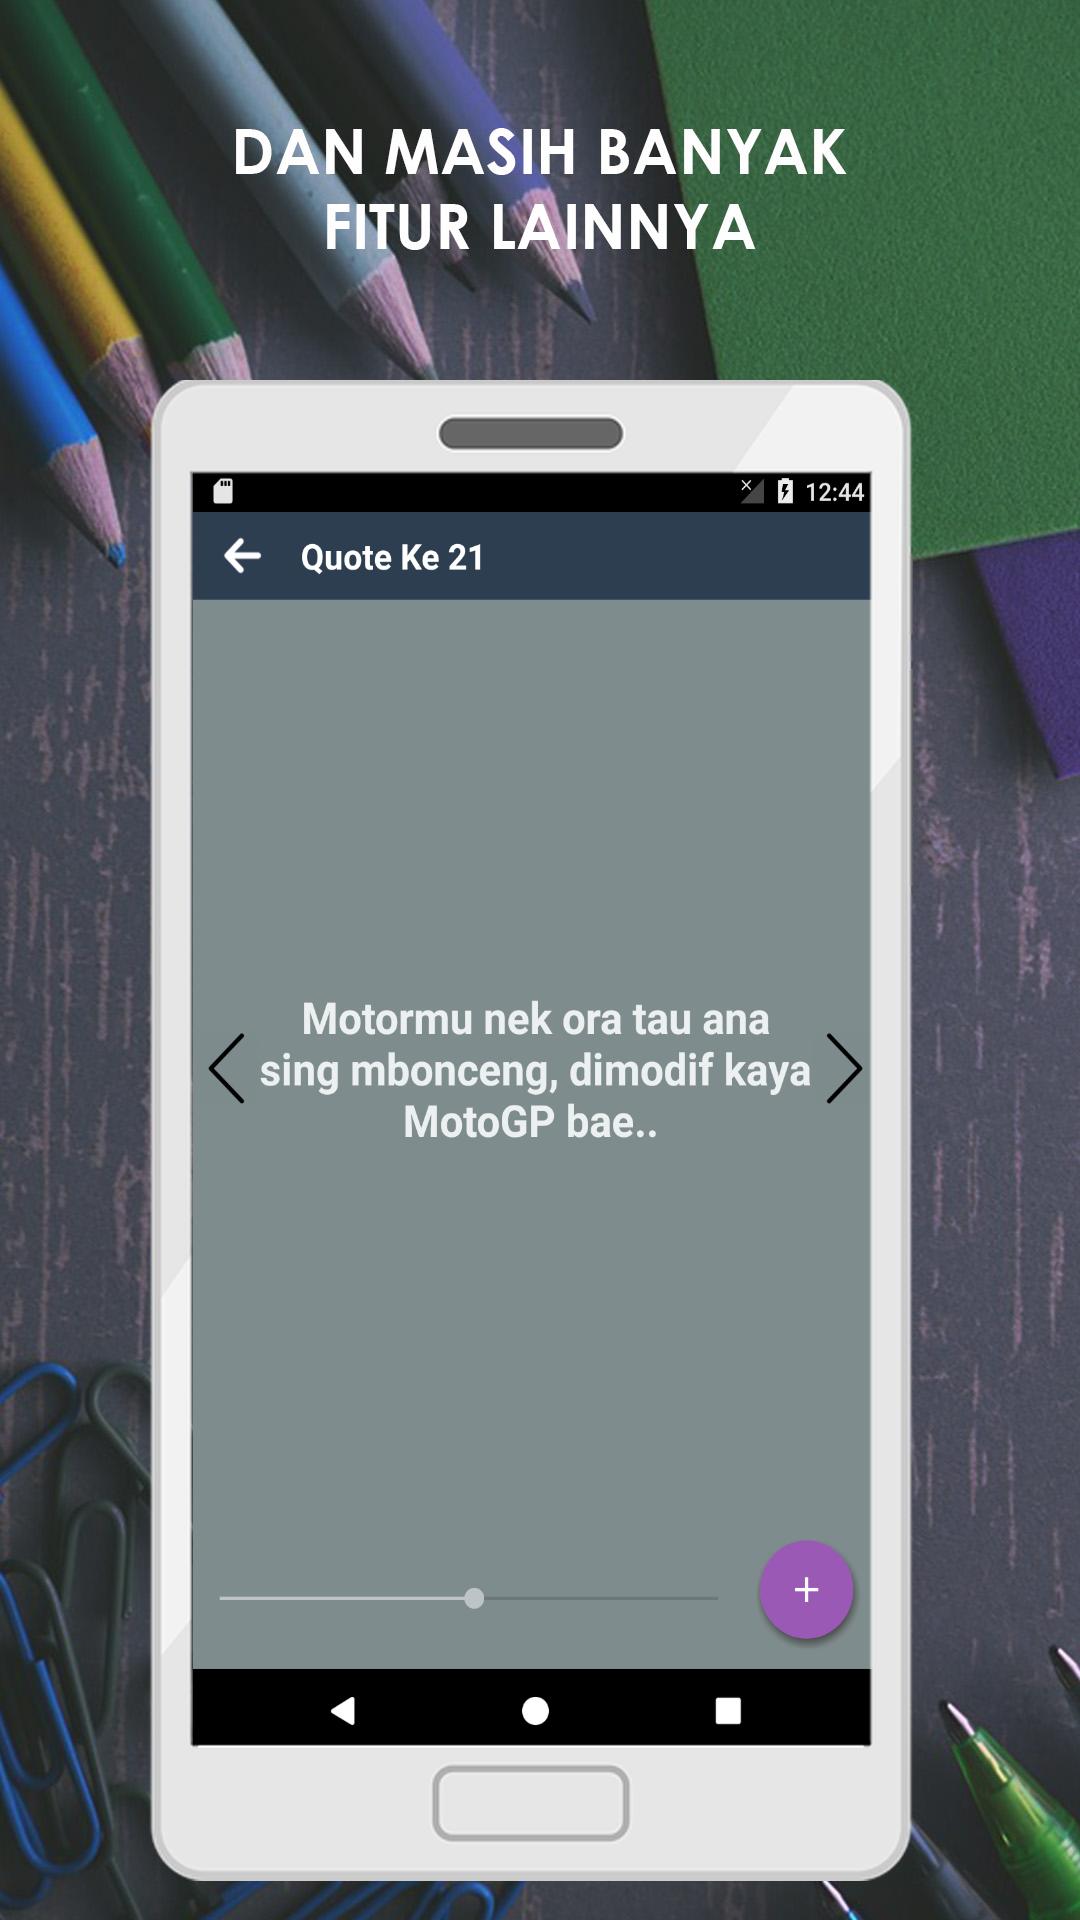 Kata Kata Lucu Bahasa Jawa Lengkap For Android Apk Download